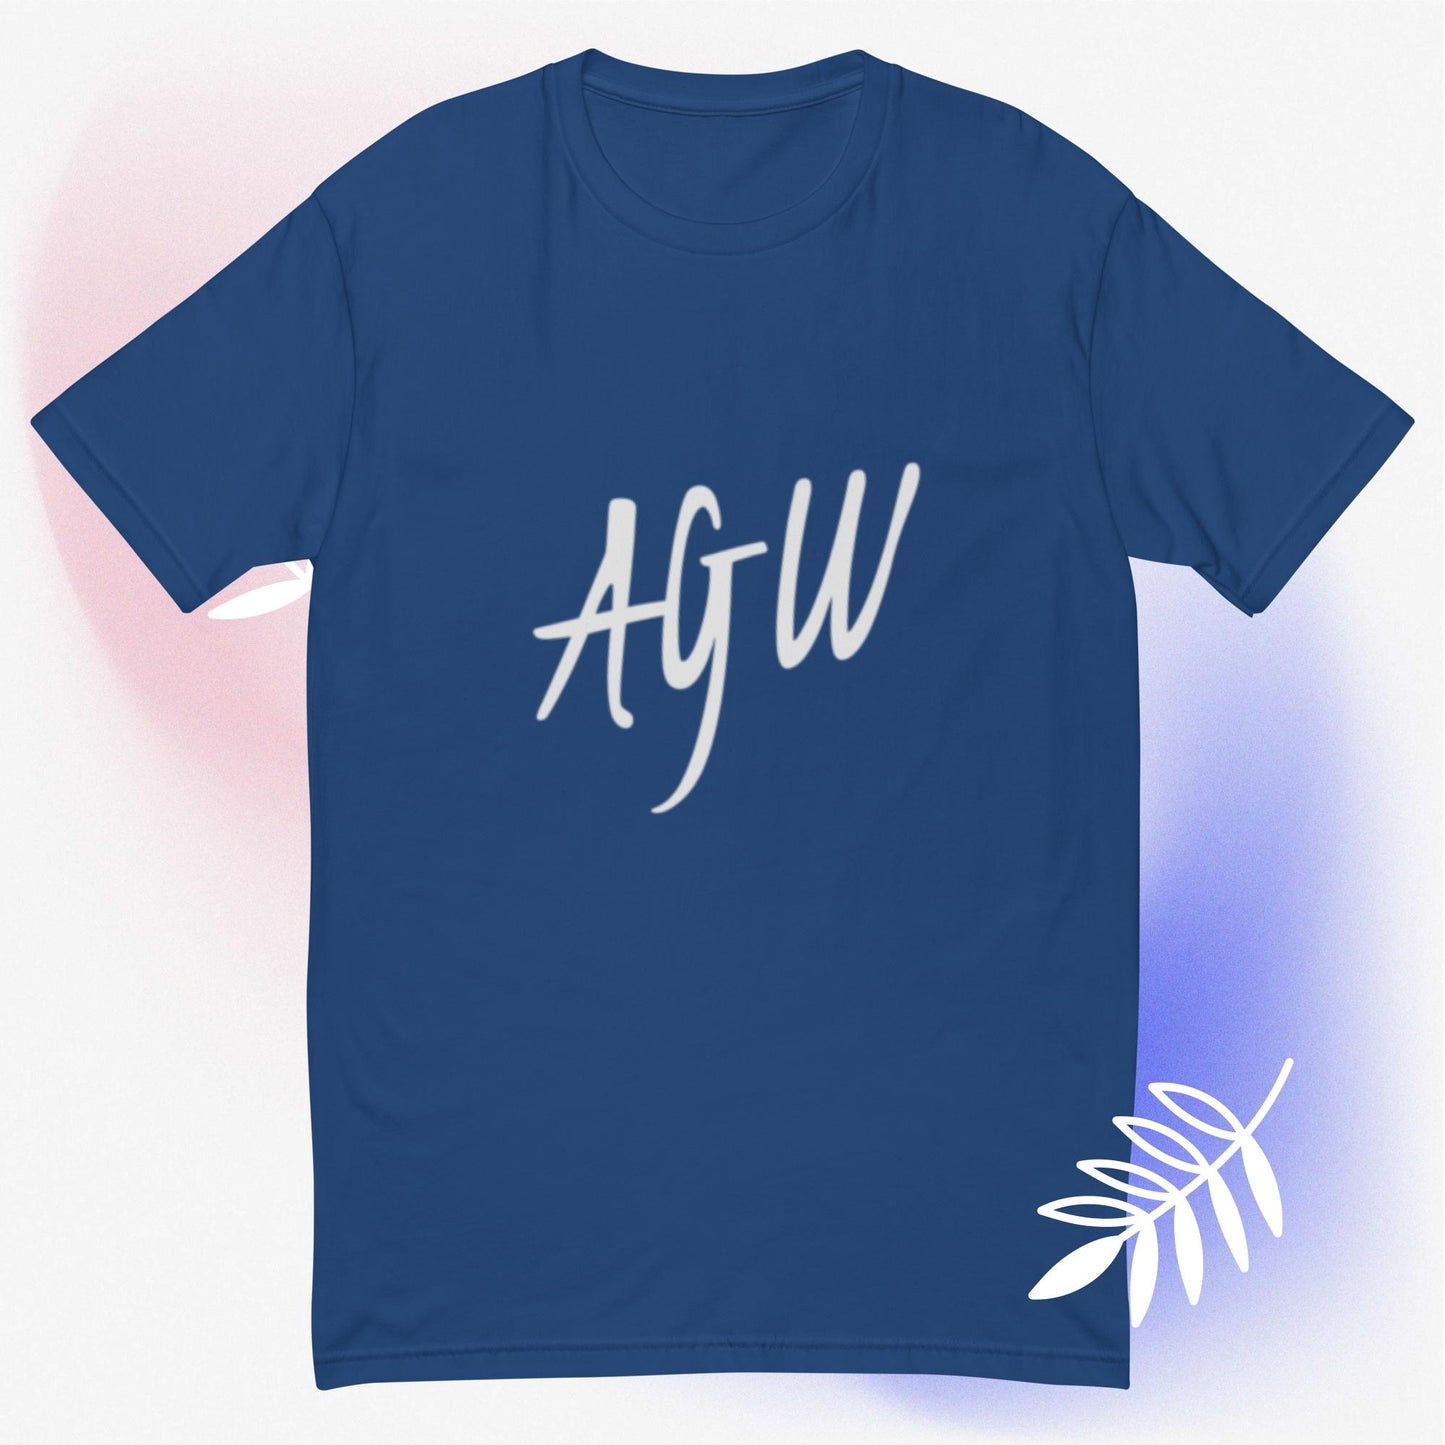 AGW Branded T-shirt